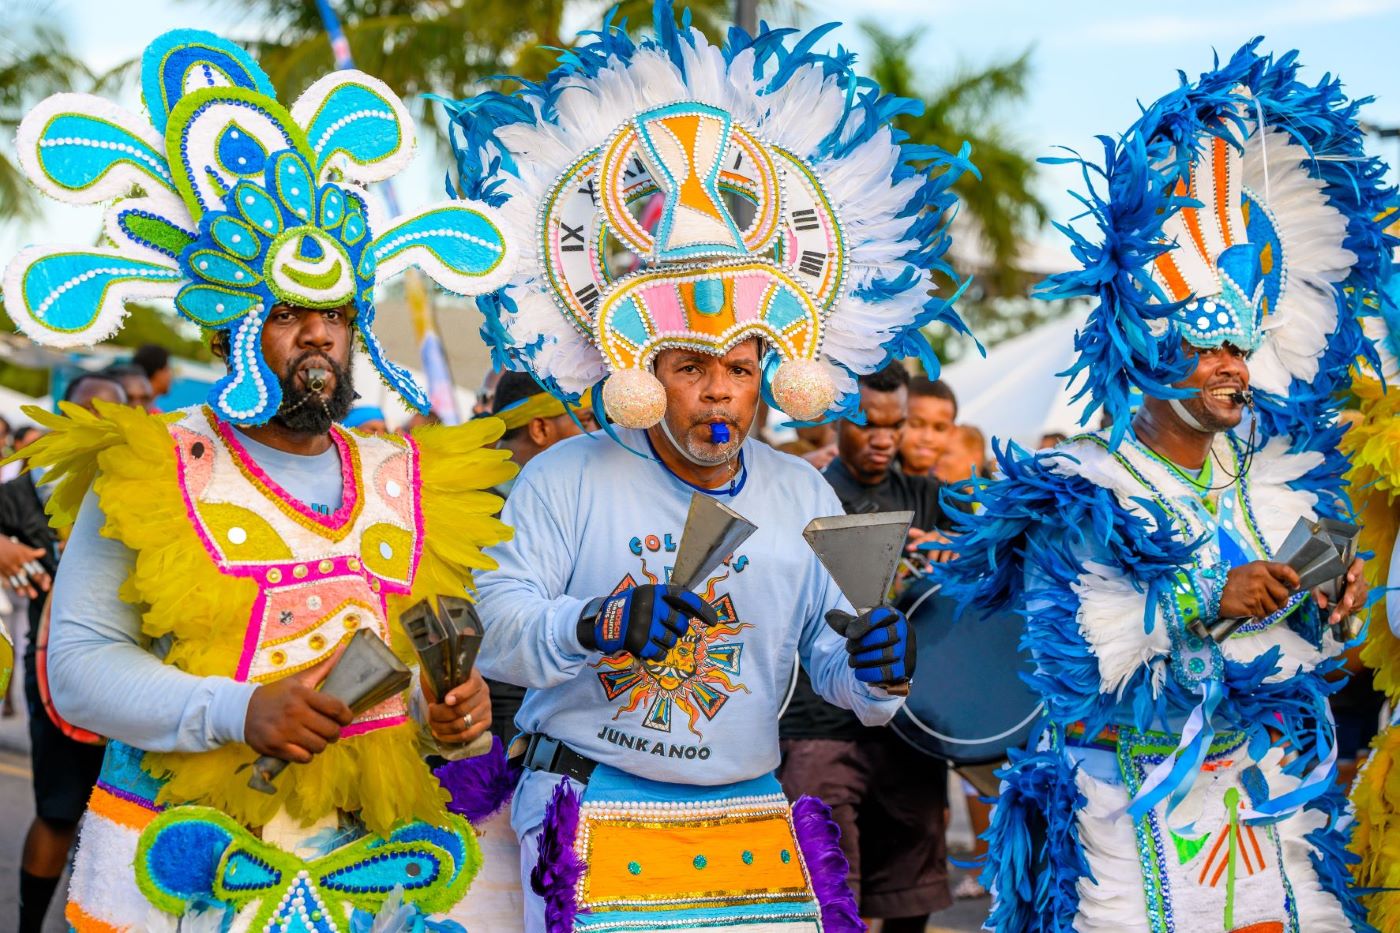 Three men in Bahamas Junkanoo costumes playing music